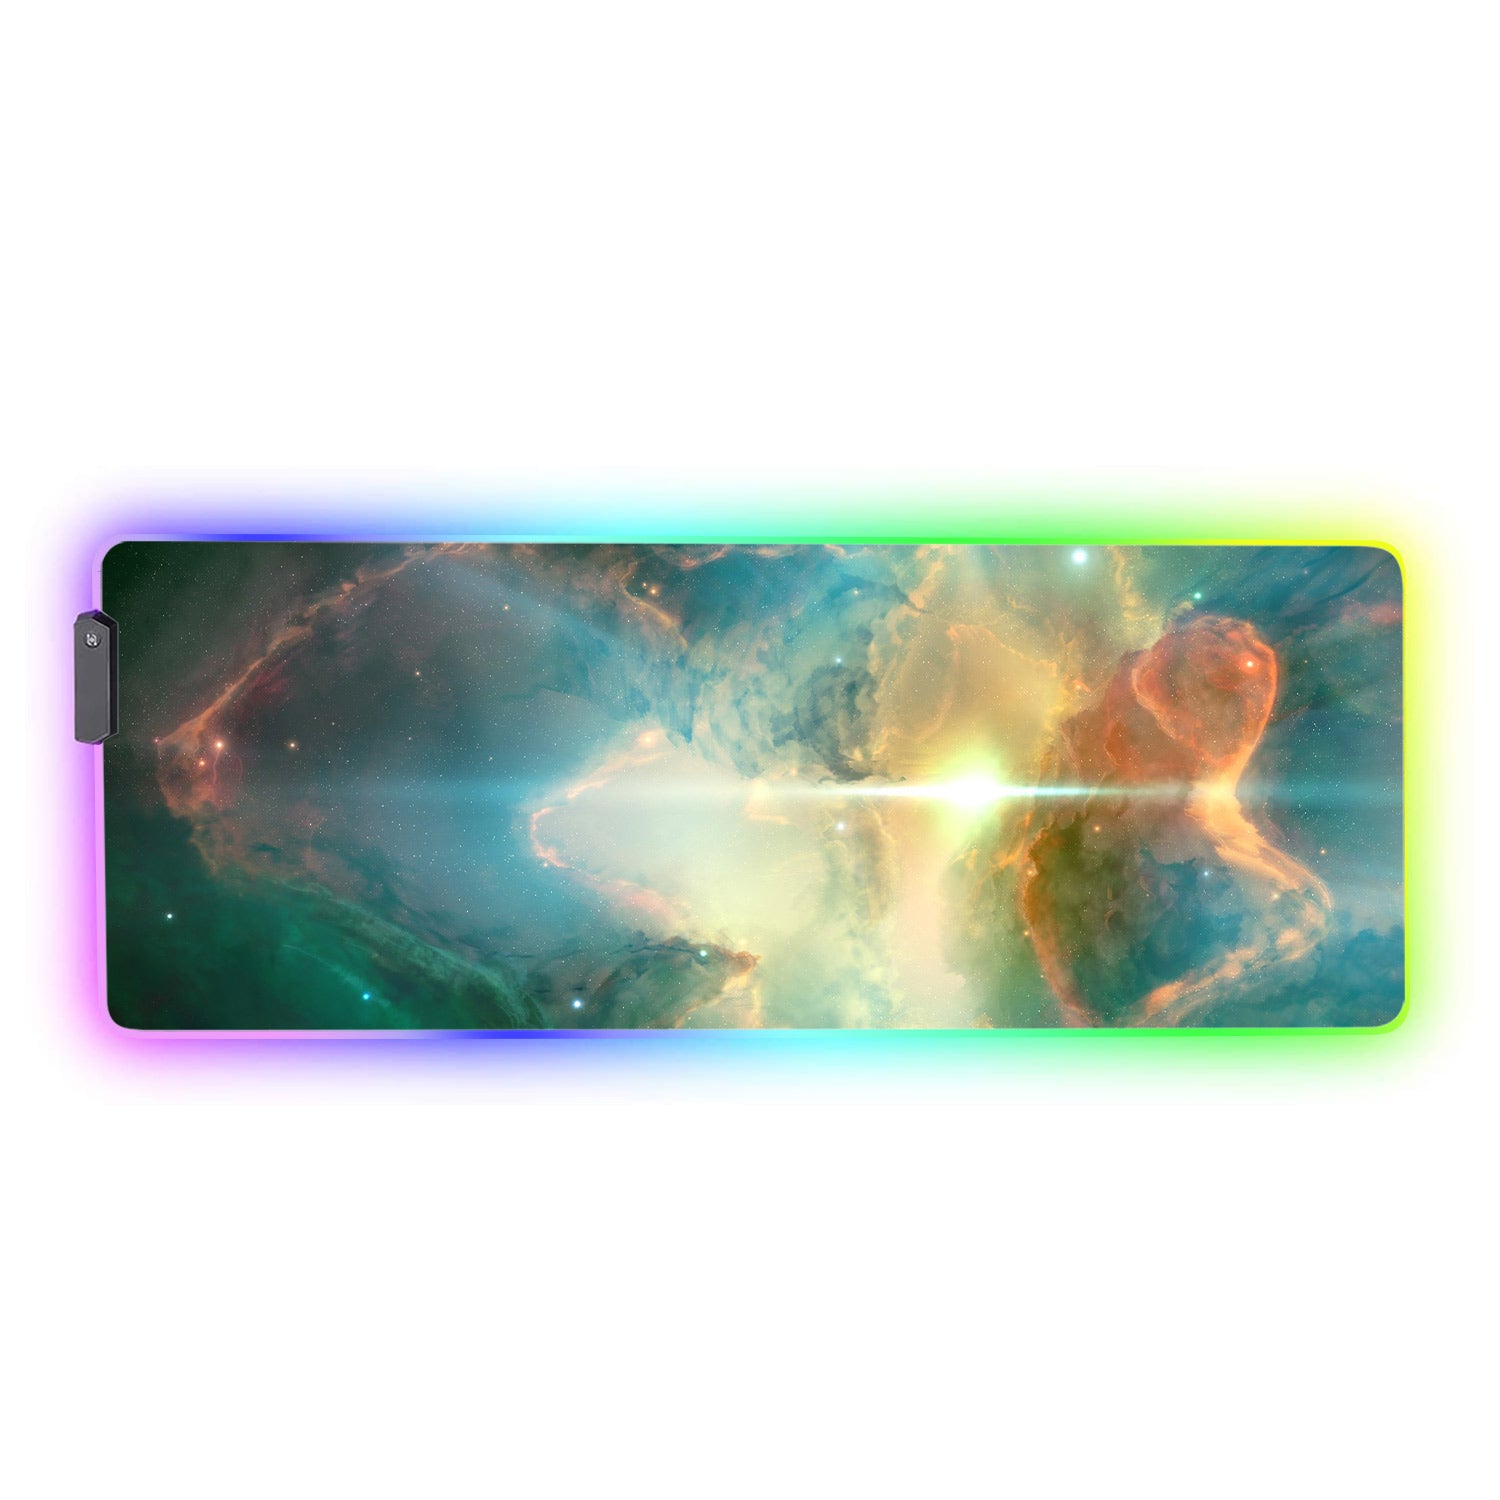 Universe Nebula RGB Gaming Mouse Pad